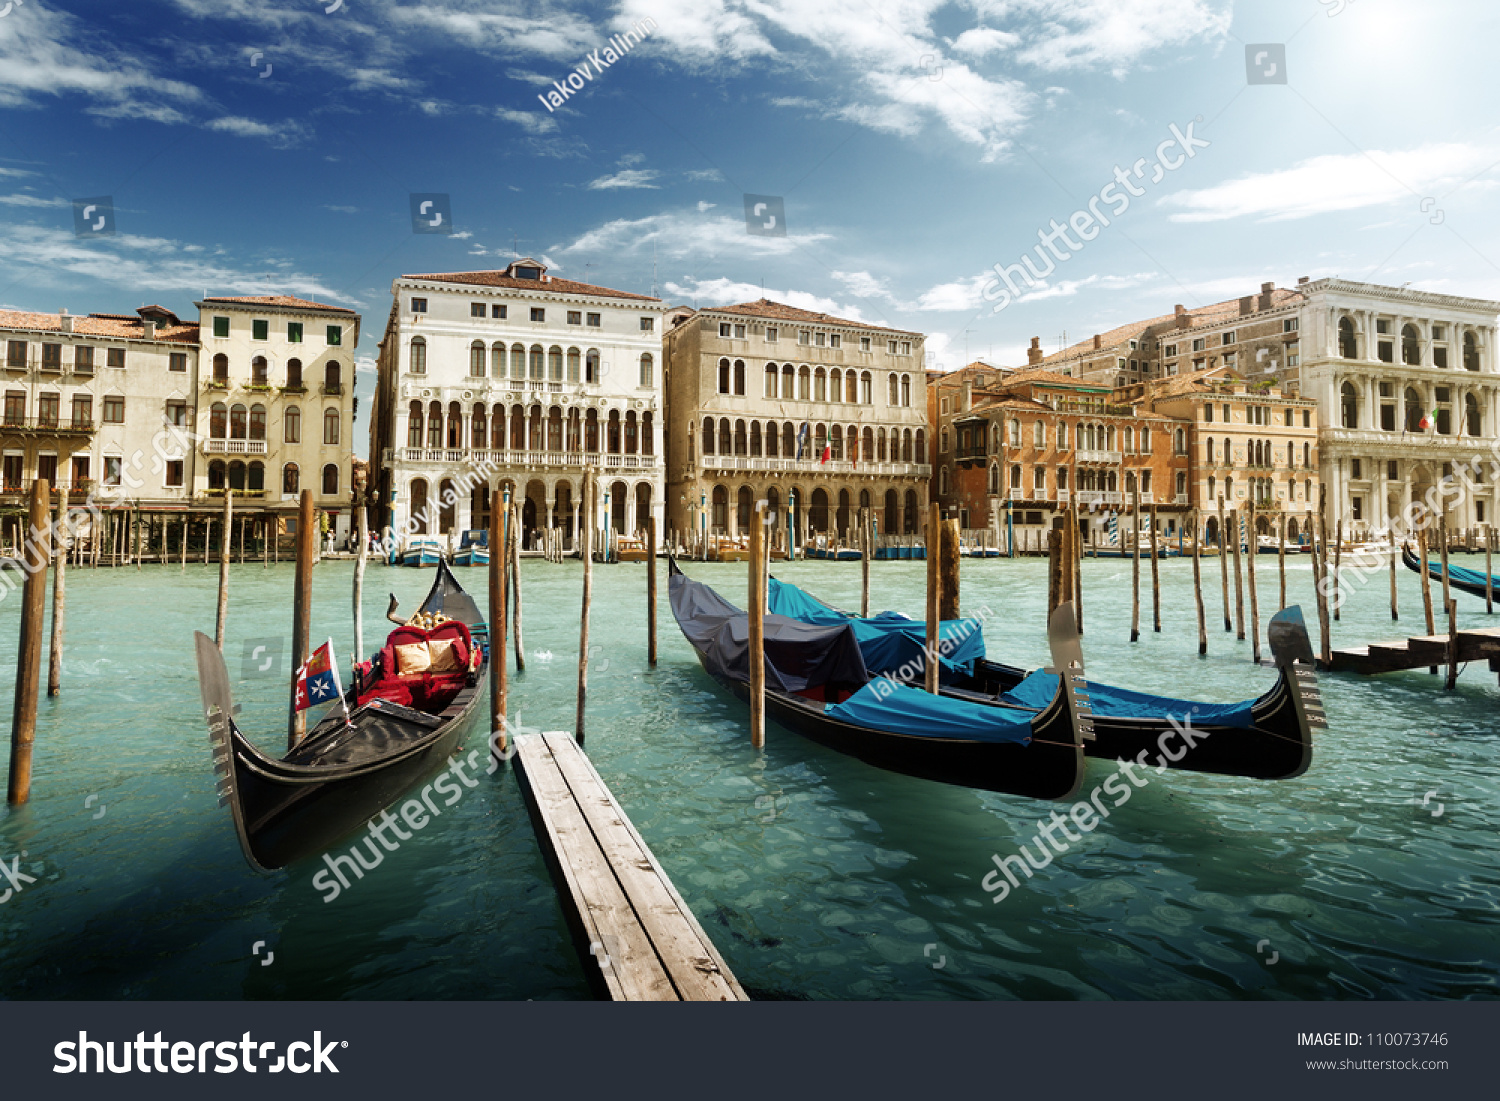 gondolas in Venice, Italy. #110073746